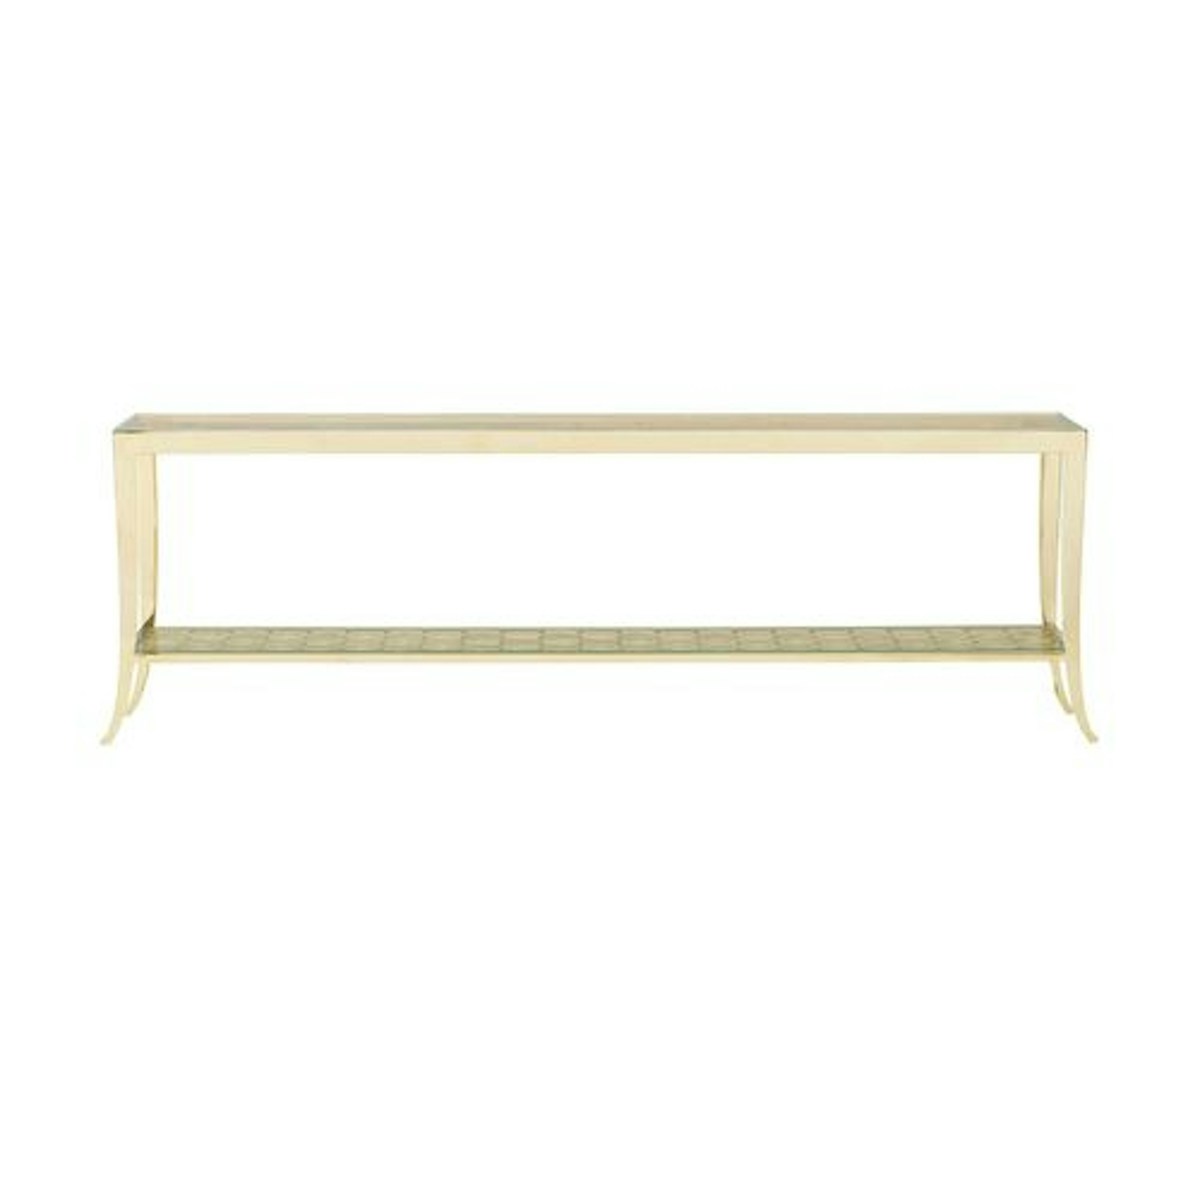 Gold Caracole console table | Shop console tables online at LuxDeco.com